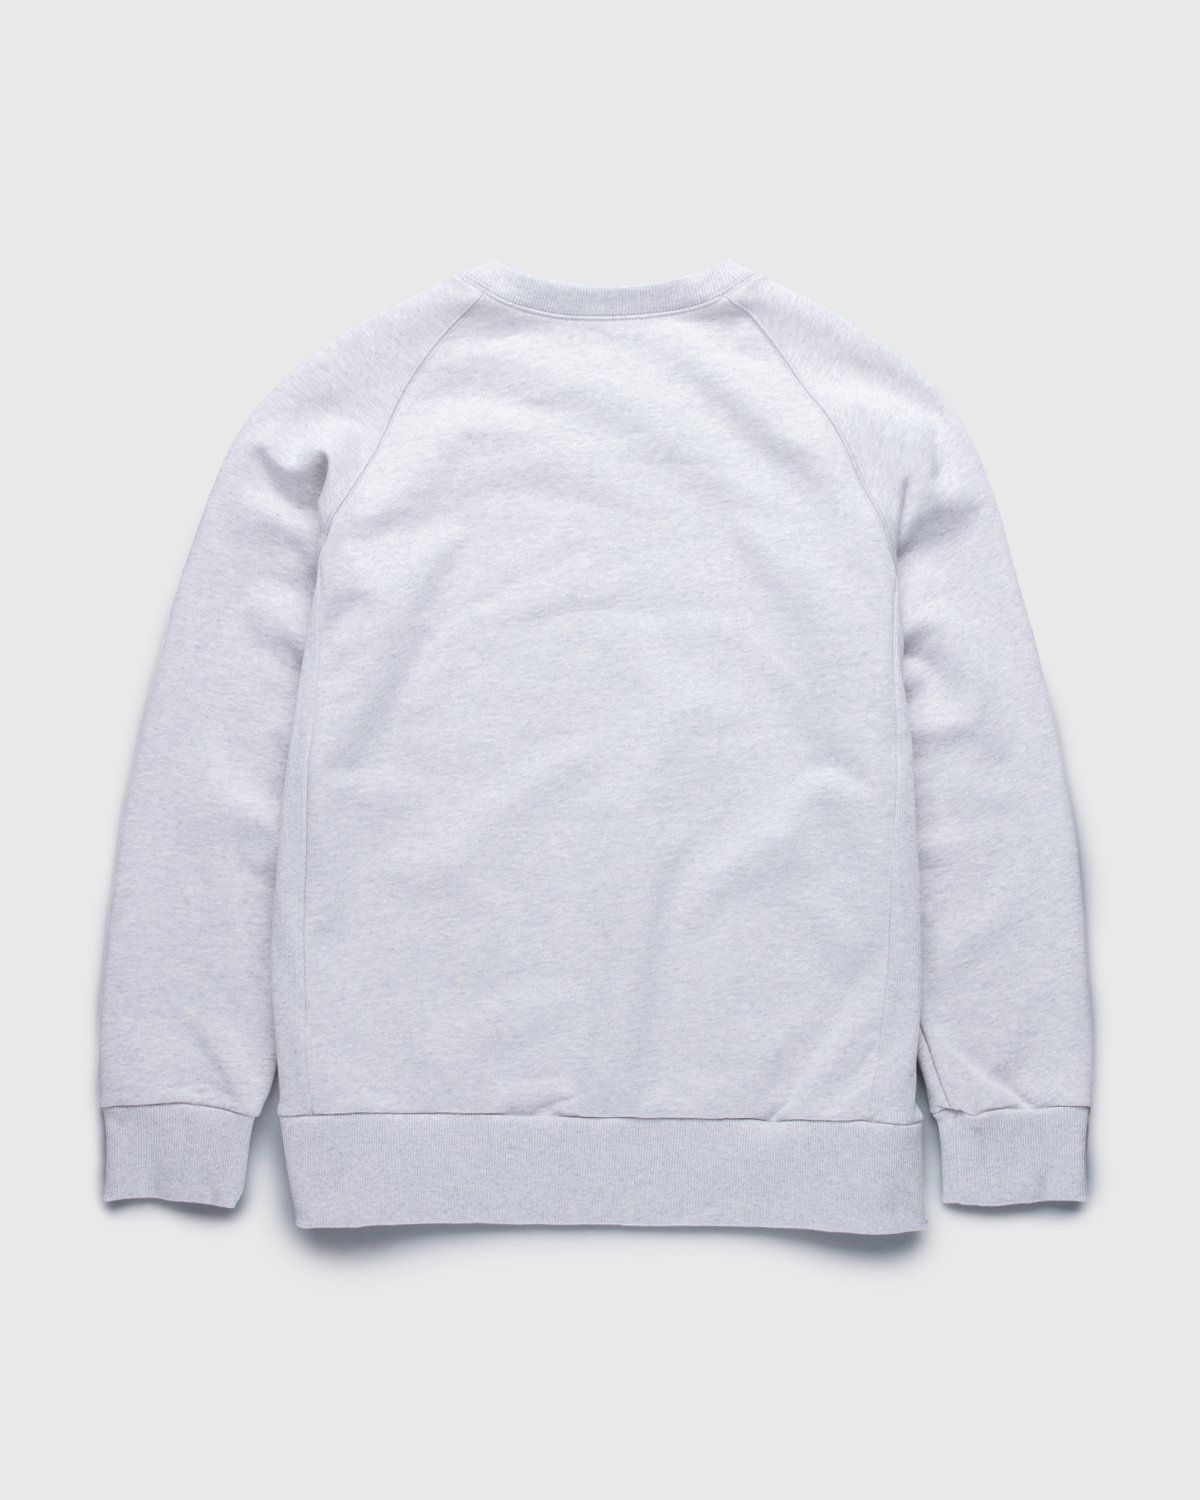 A.P.C. x Sacai – Tani Sweater Light Grey - Sweatshirts - Grey - Image 2